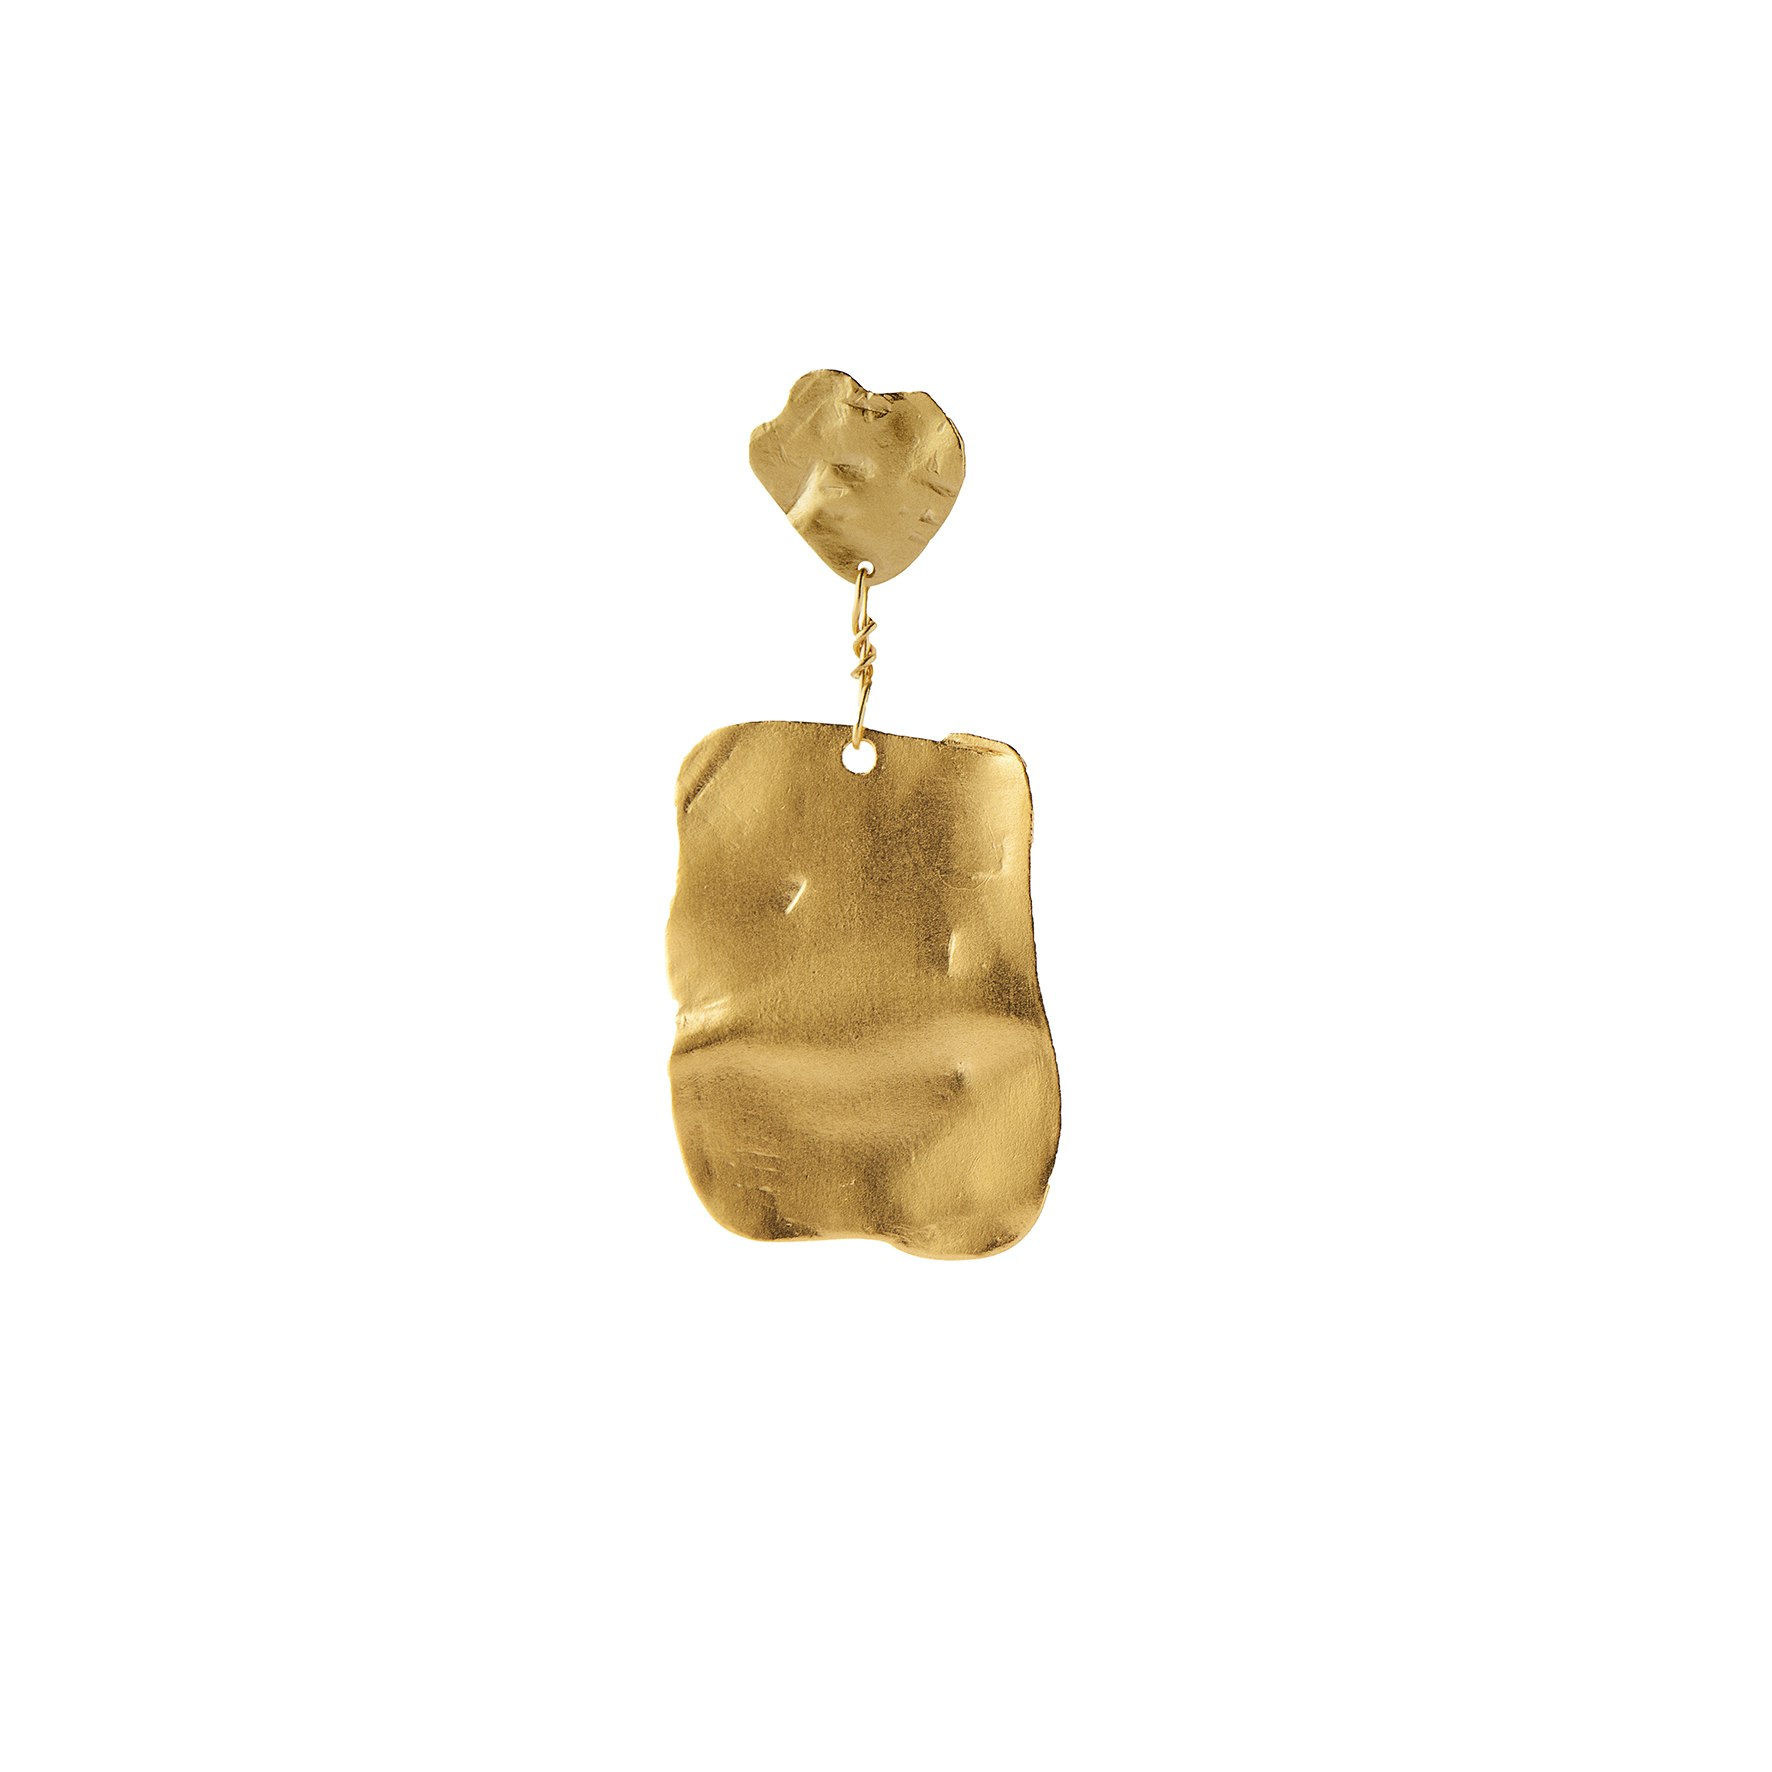 Golden Reflection Earring van STINE A Jewelry in Verguld-Zilver Sterling 925